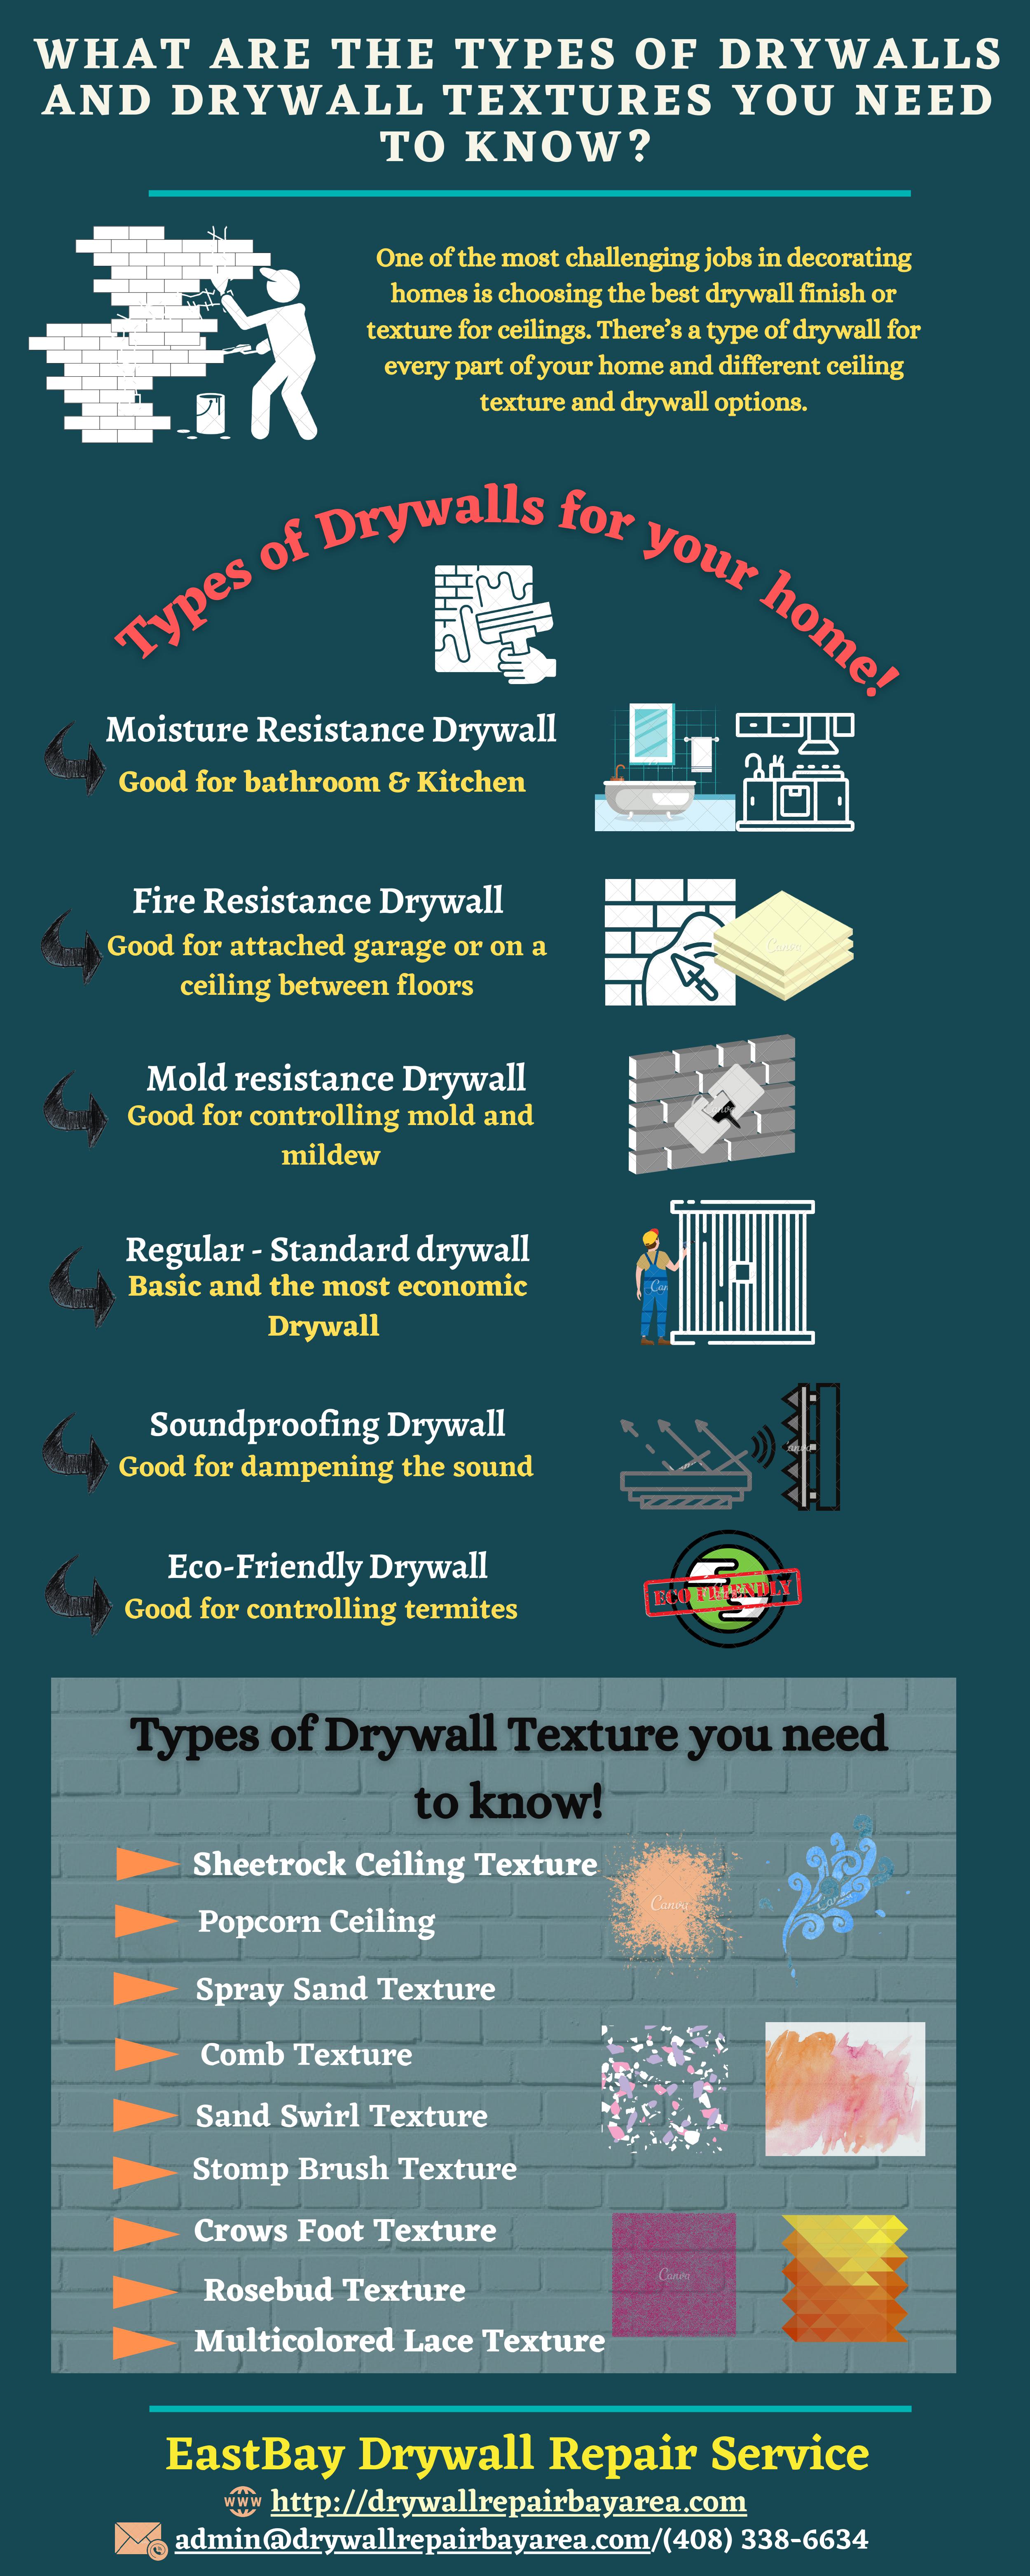 EastBay Drywall Repair Service